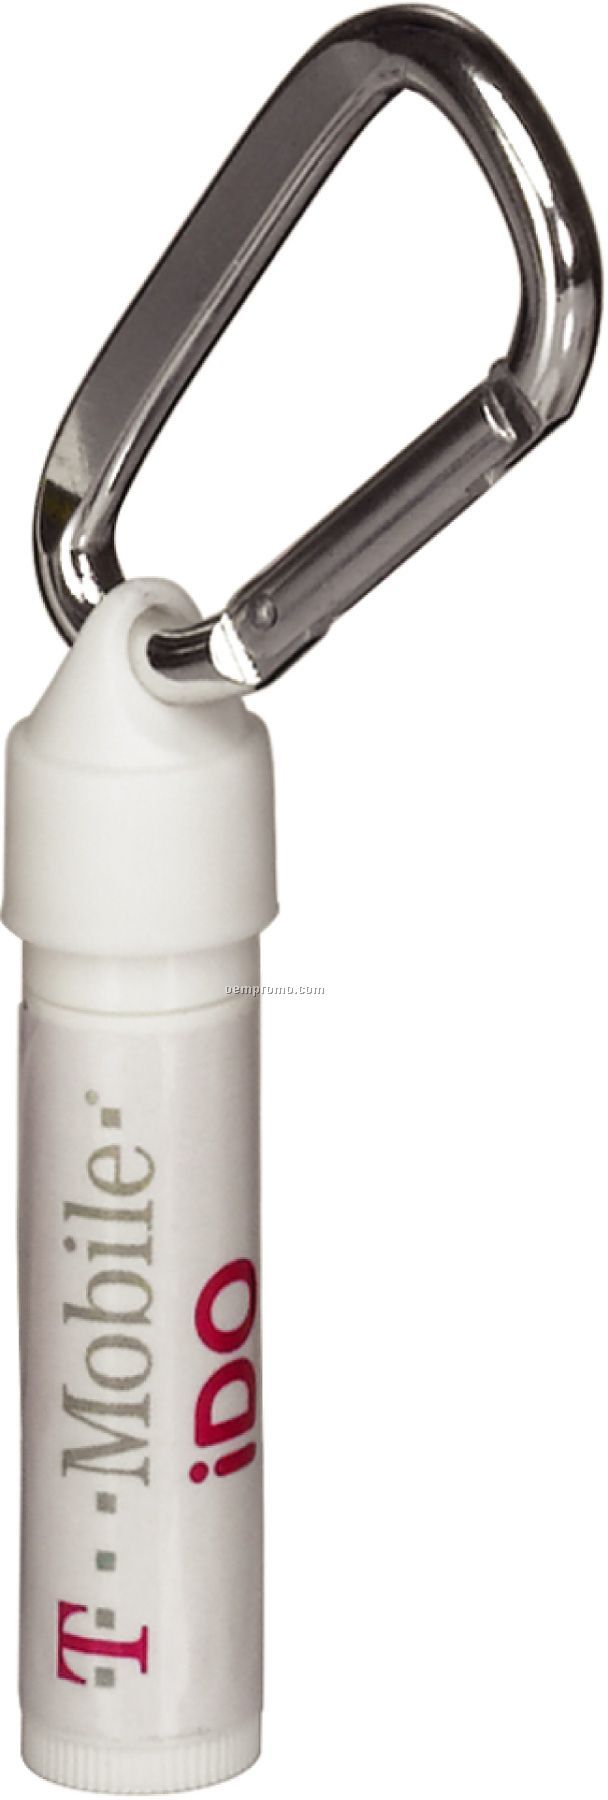 Spf 15 Lip Balm In White Tube With Carabiner Clip